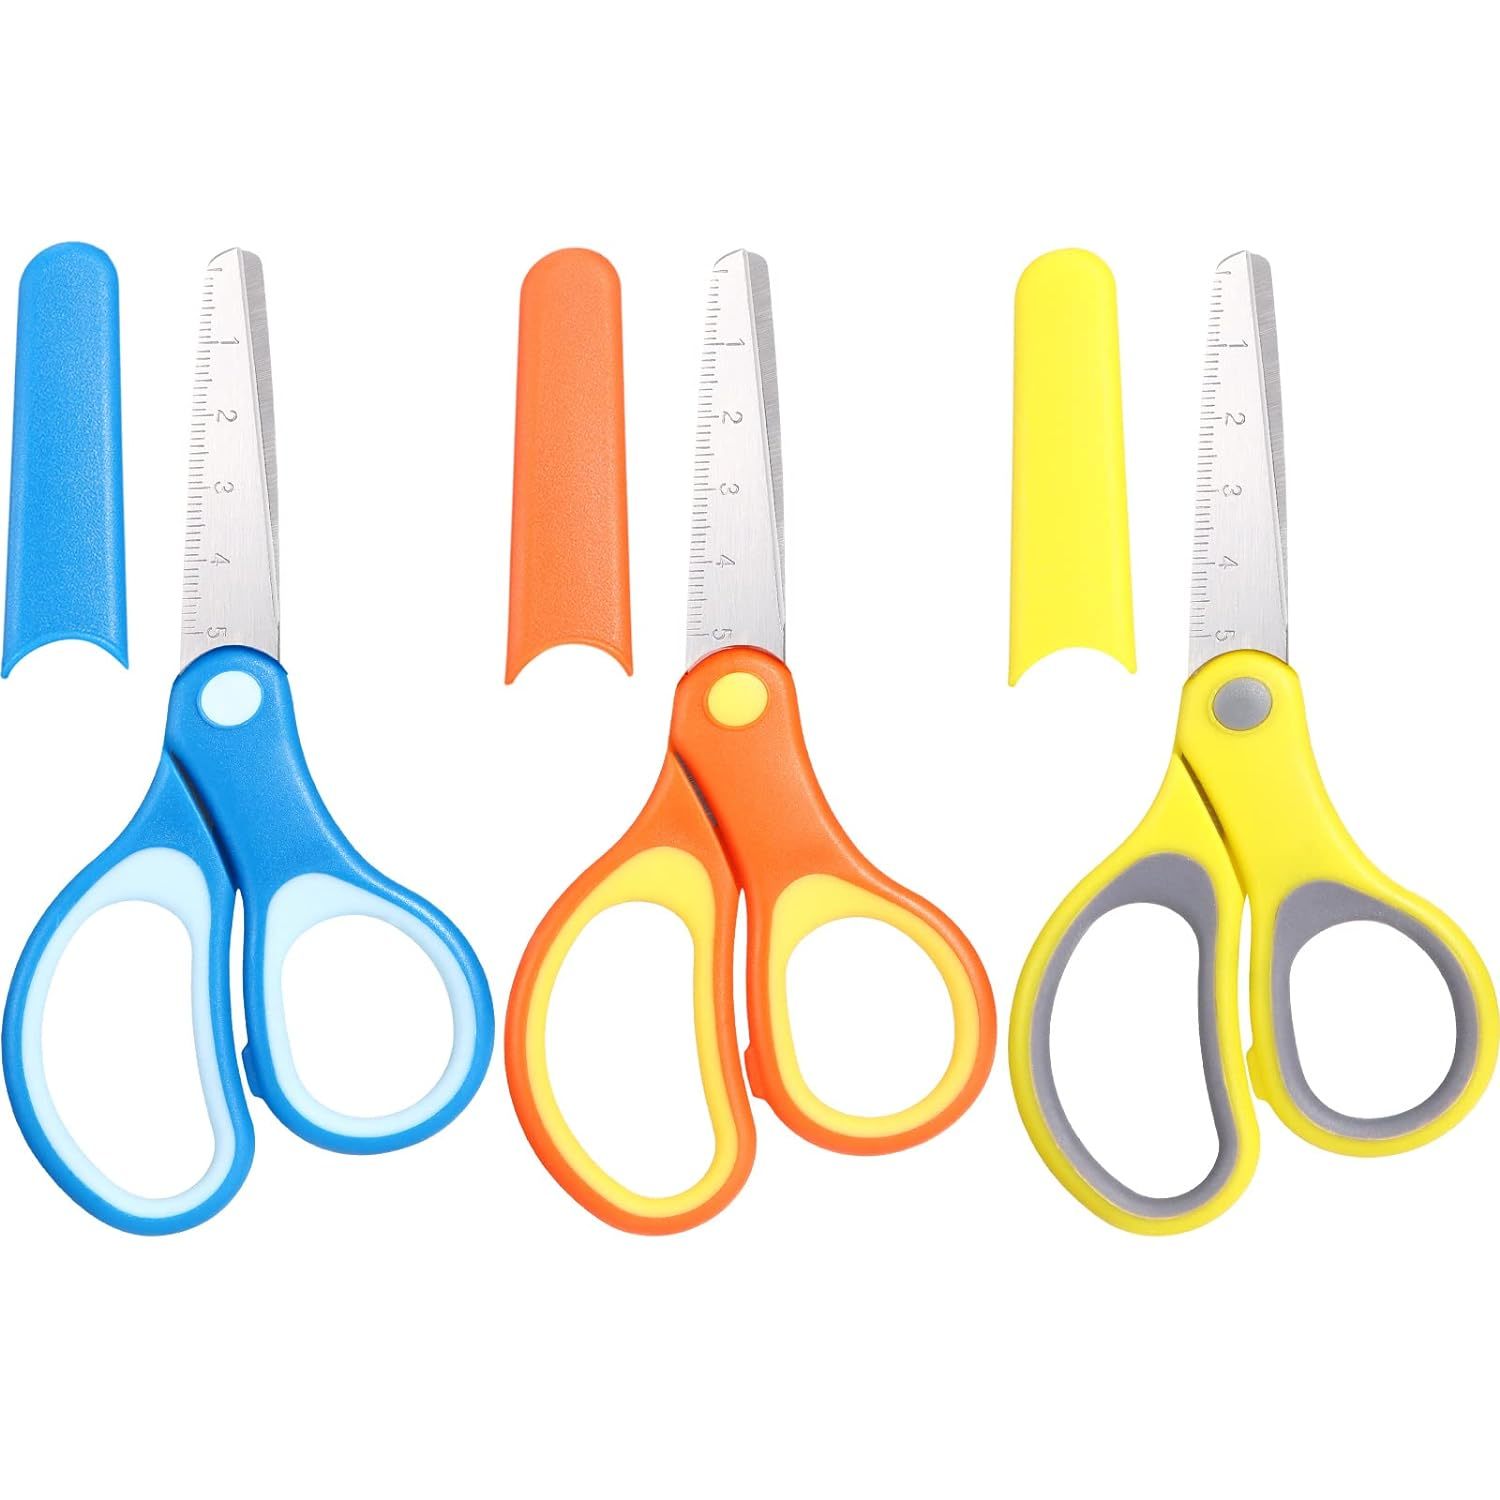 6 inch Left/Right Handed Kids Scissors, Safety Blunt Tip Toddler Scissors Stainl